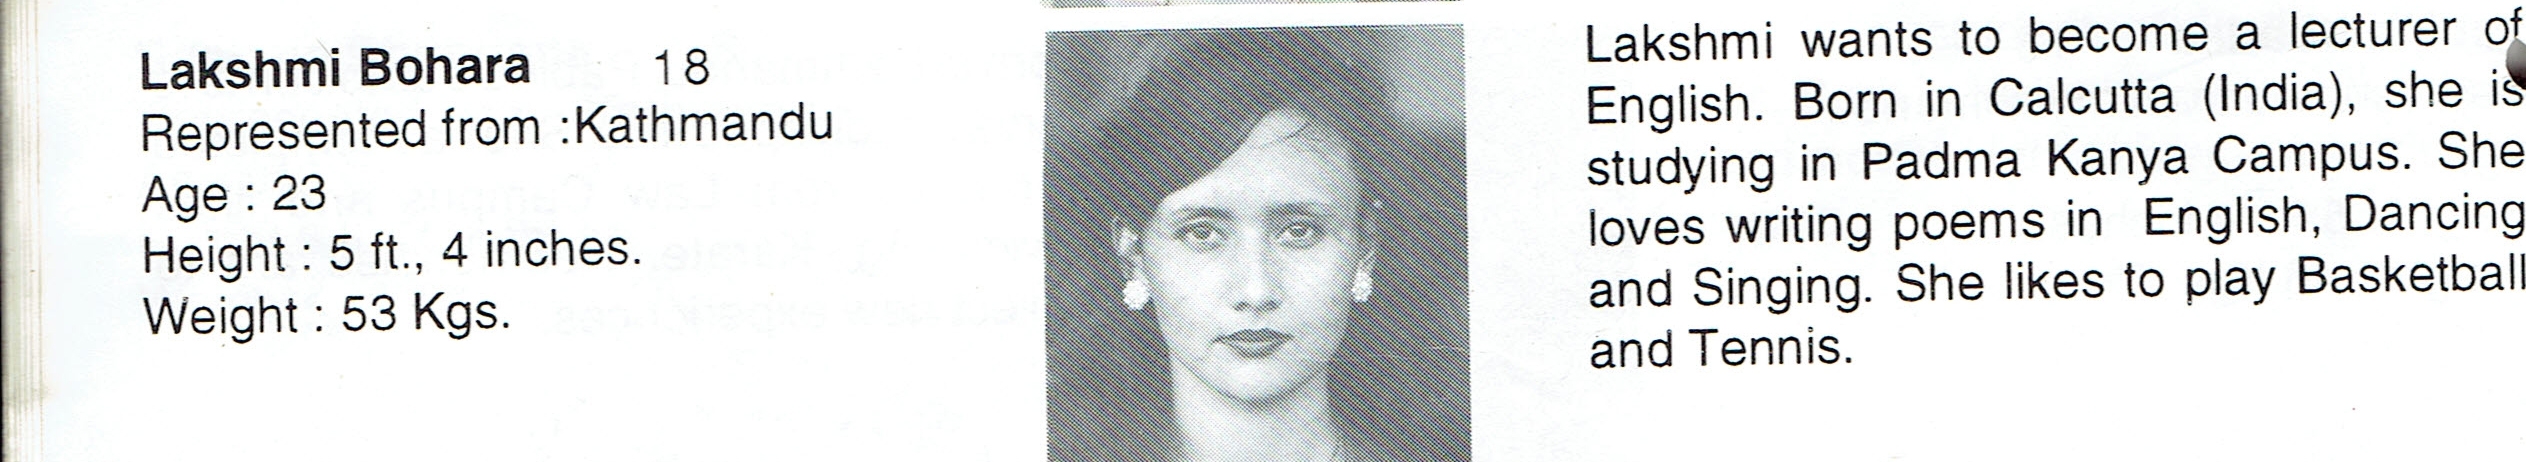 Lakshmi Bohara